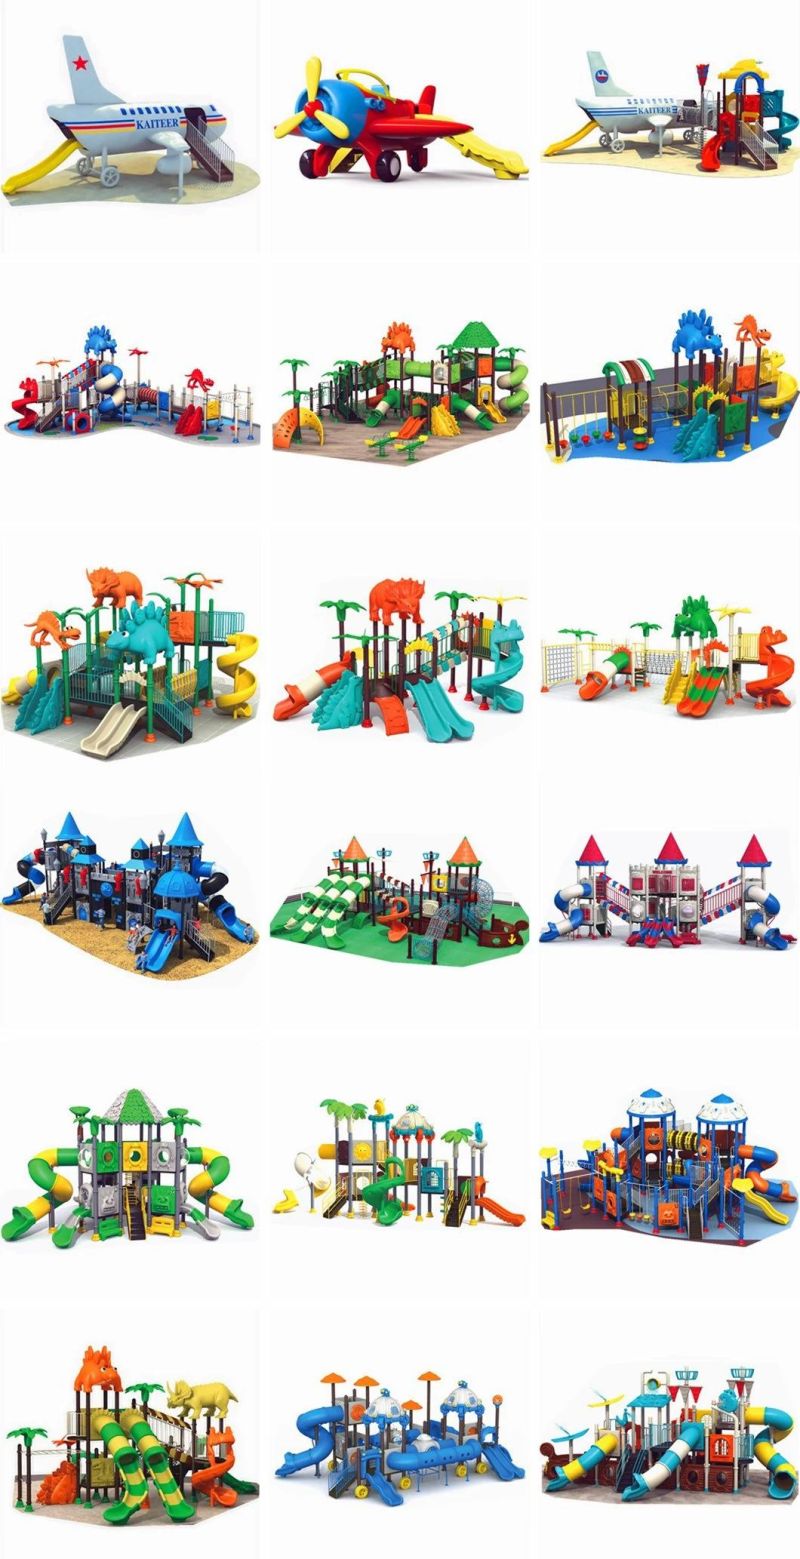 Outdoor Playground Plastic Slide Kids Amusement Park Equipment Swing 290b